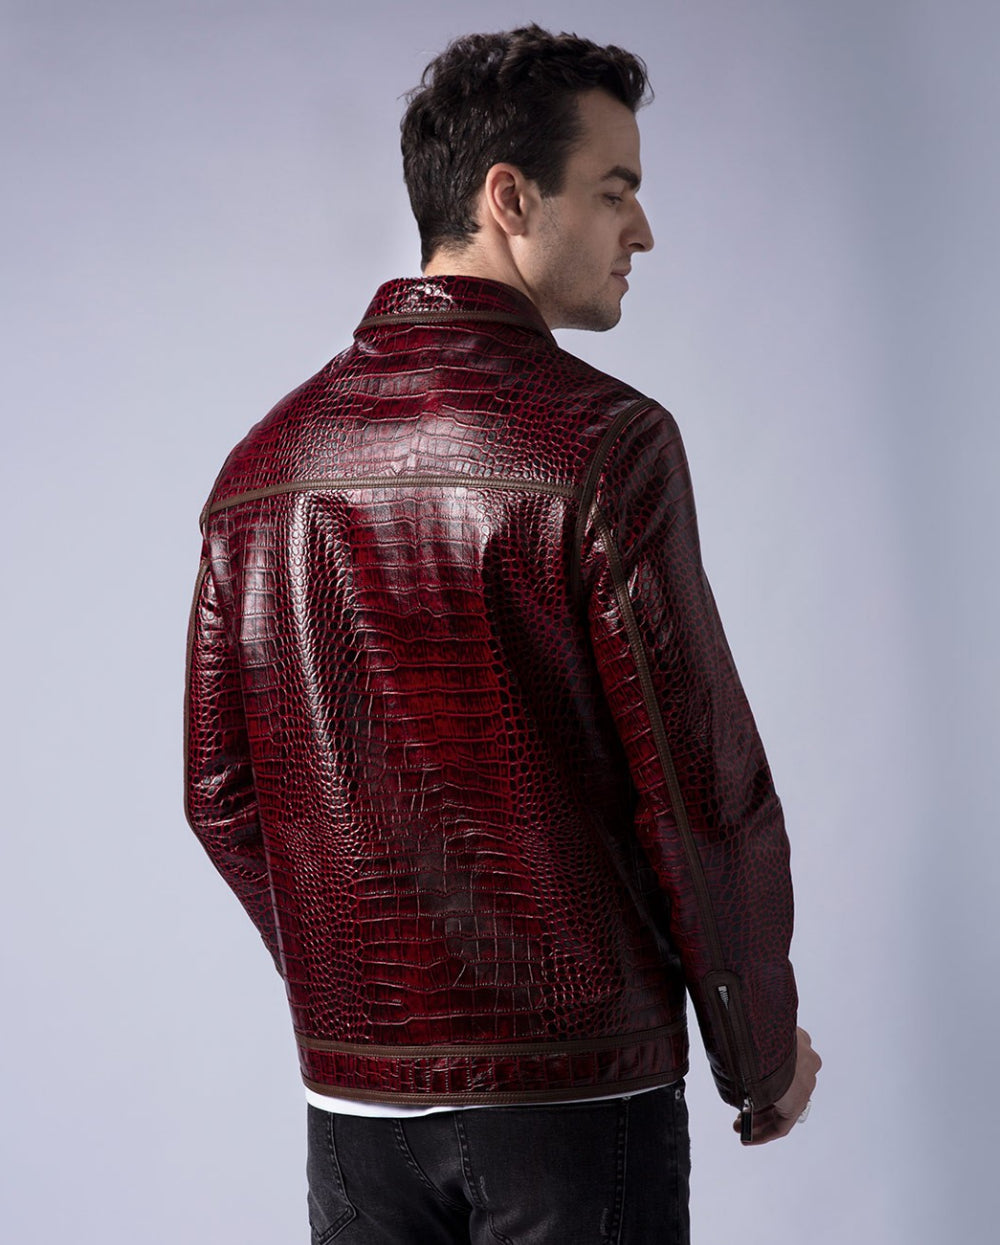 Korean fashion - mens red leather crocodile skin moto jacket.